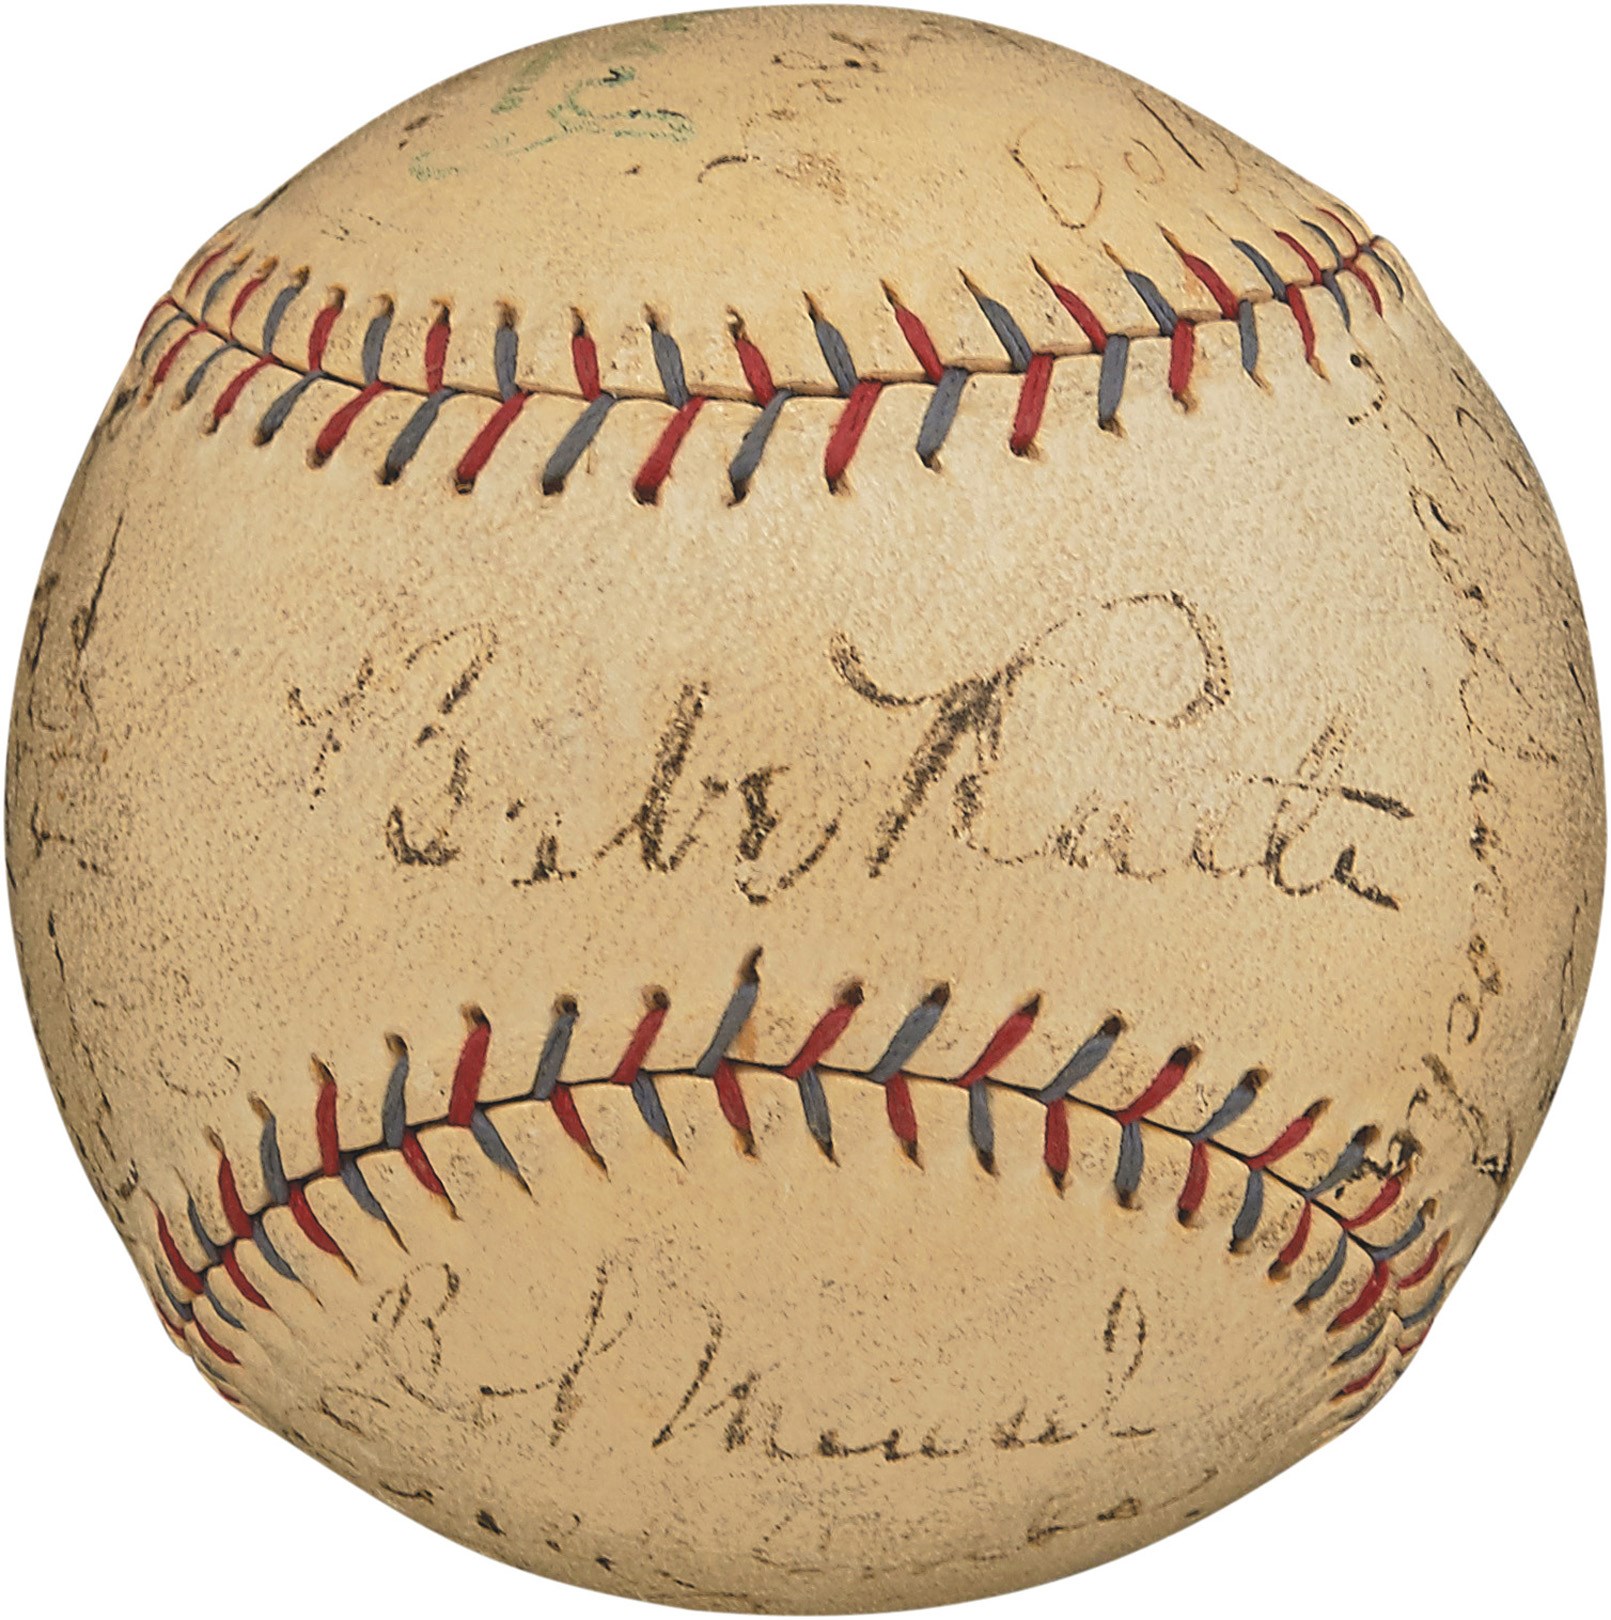 NY Yankees, Giants & Mets - 1929 New York Yankees Team-Signed Baseball w/Ruth & Gehrig (PSA)